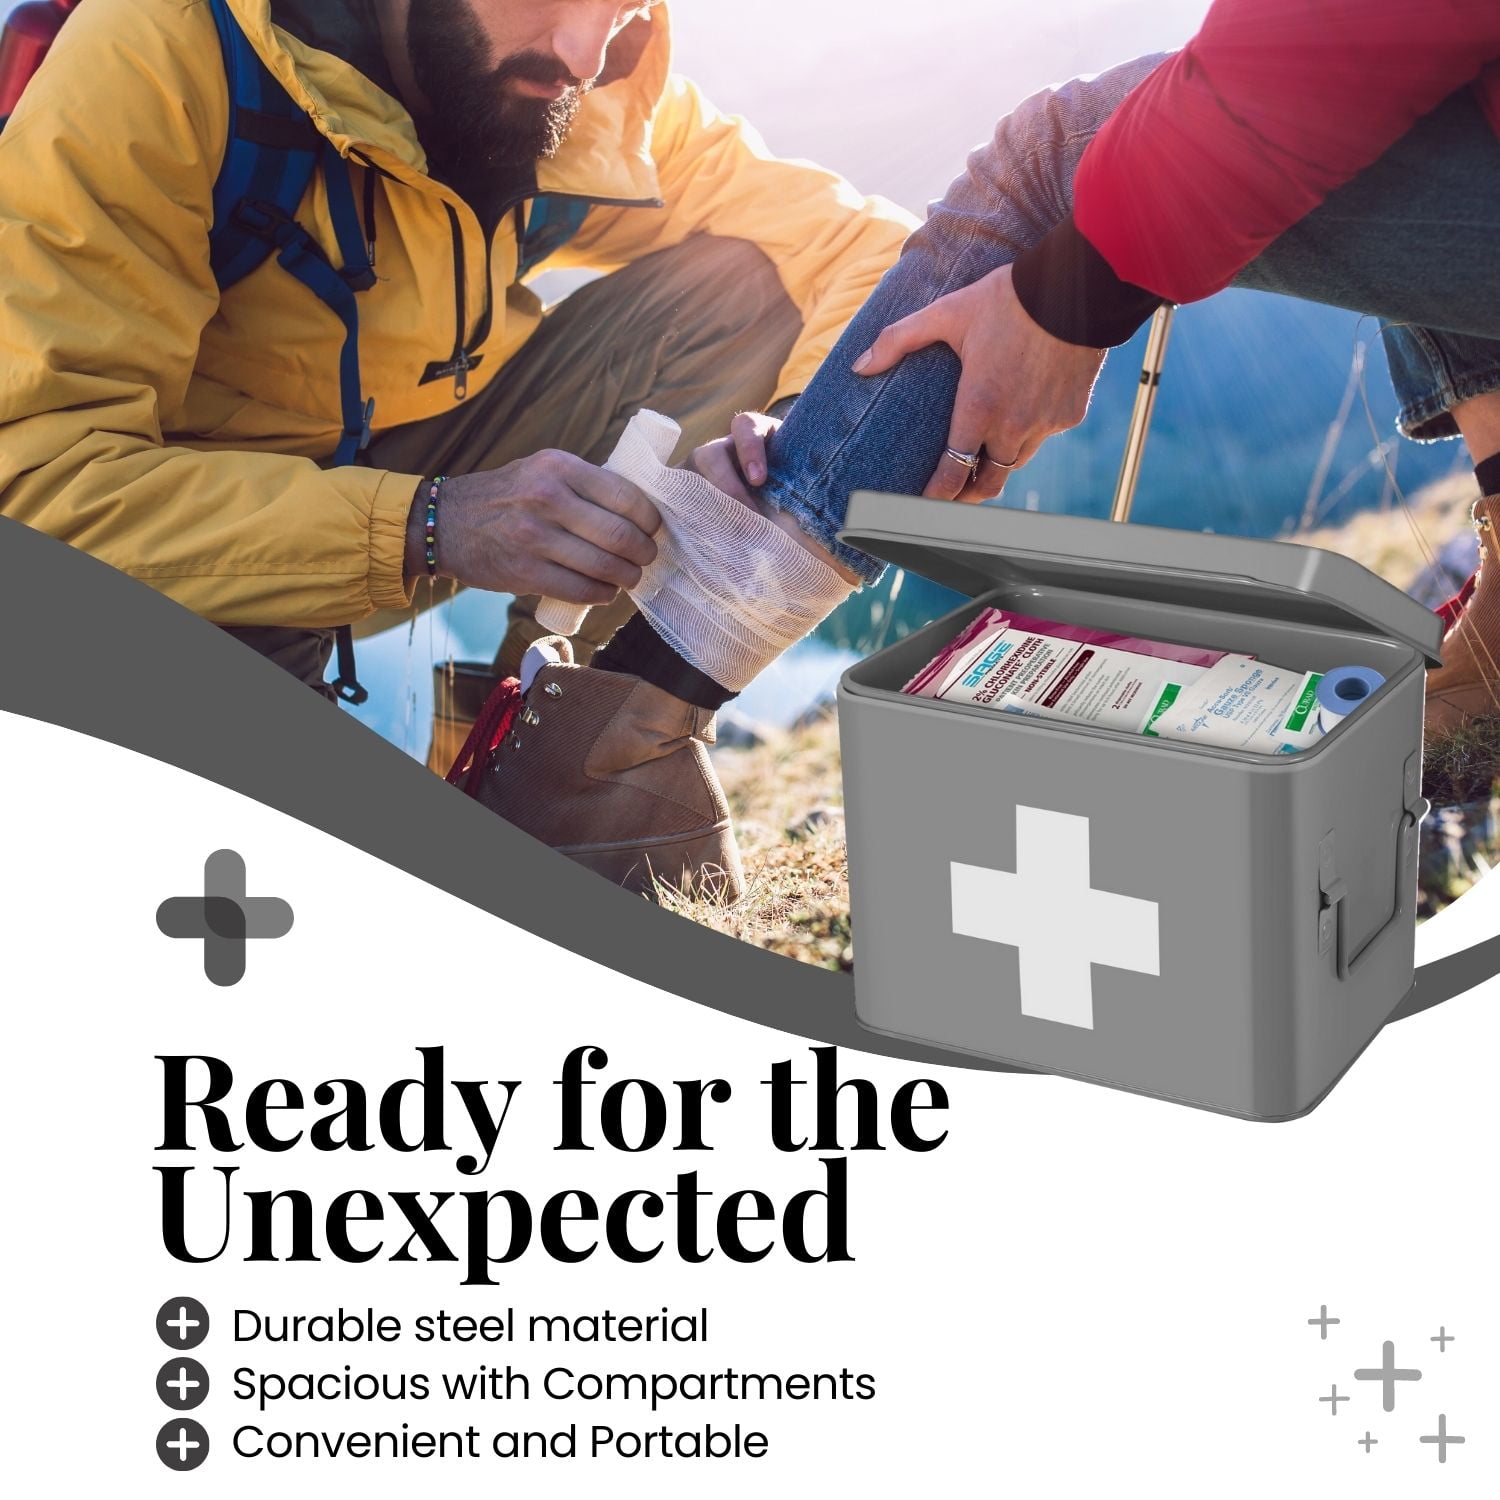  Parlynies First Aid Storage Box, Medicine Box, Plastic Clear  Storage Bin, 1 Pack : Home & Kitchen